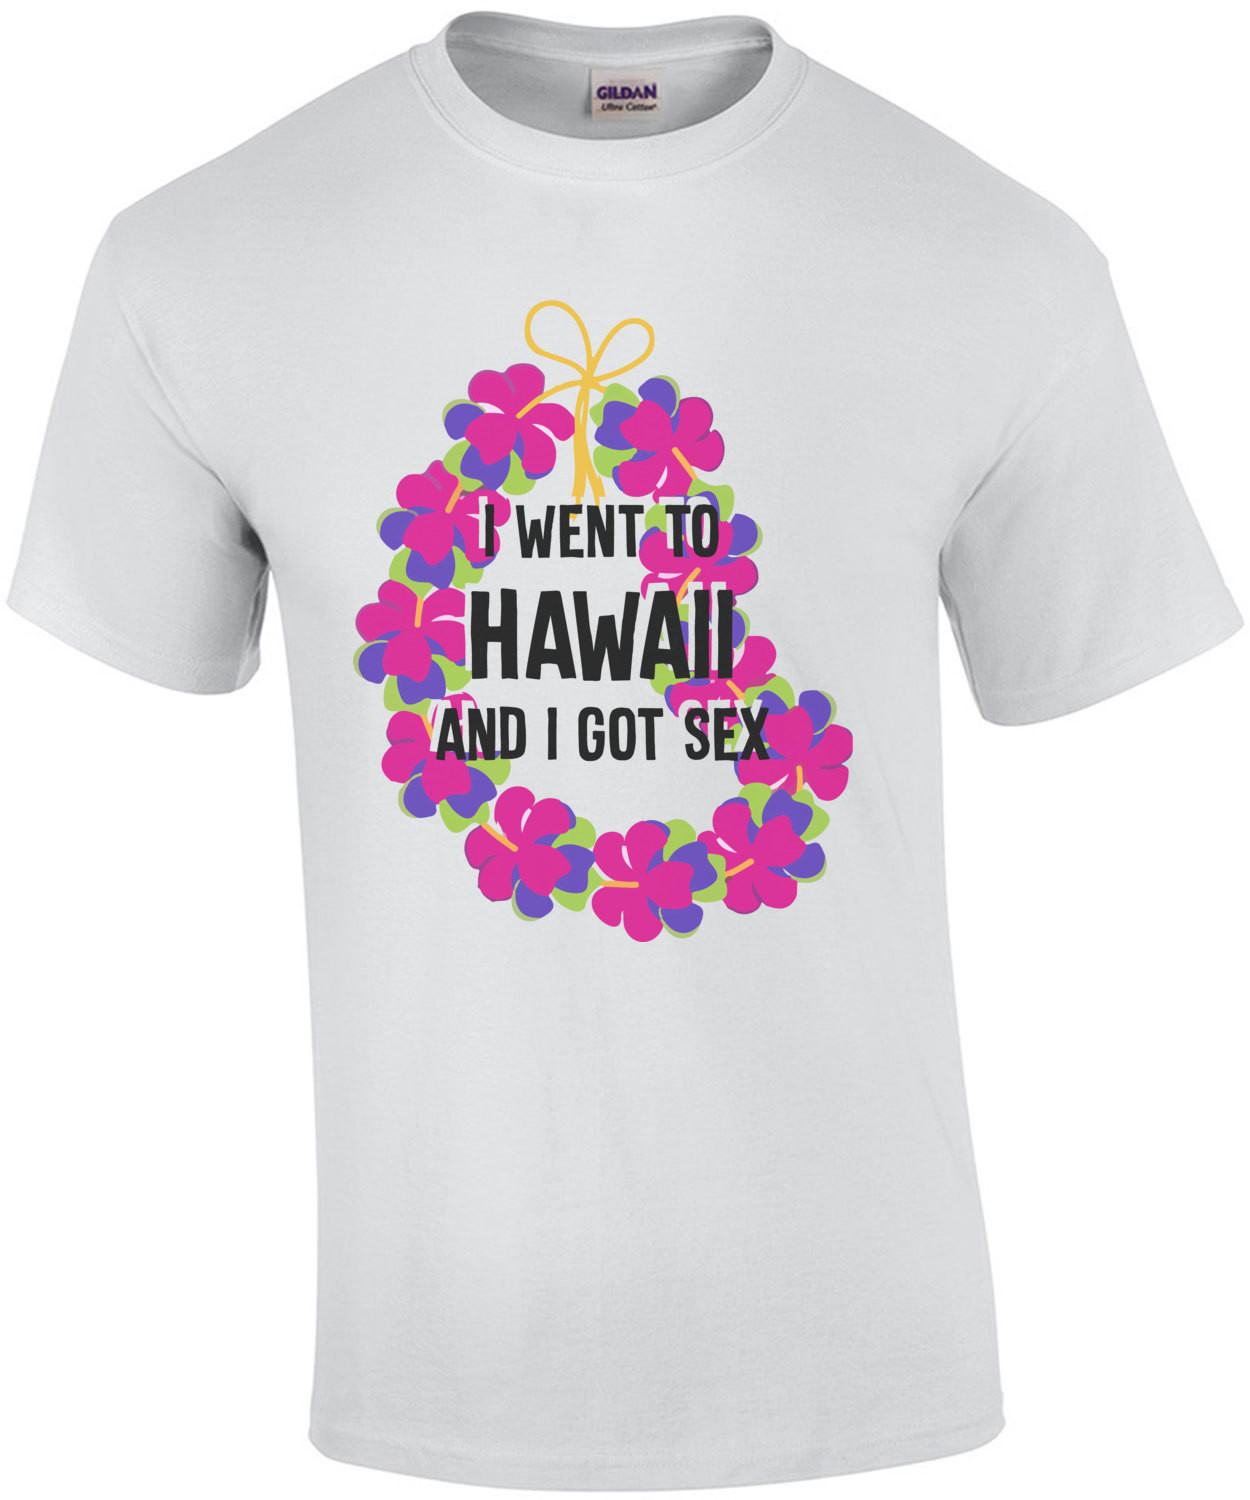 I went to Hawaii and I got sex - Hawaii T-Shirt